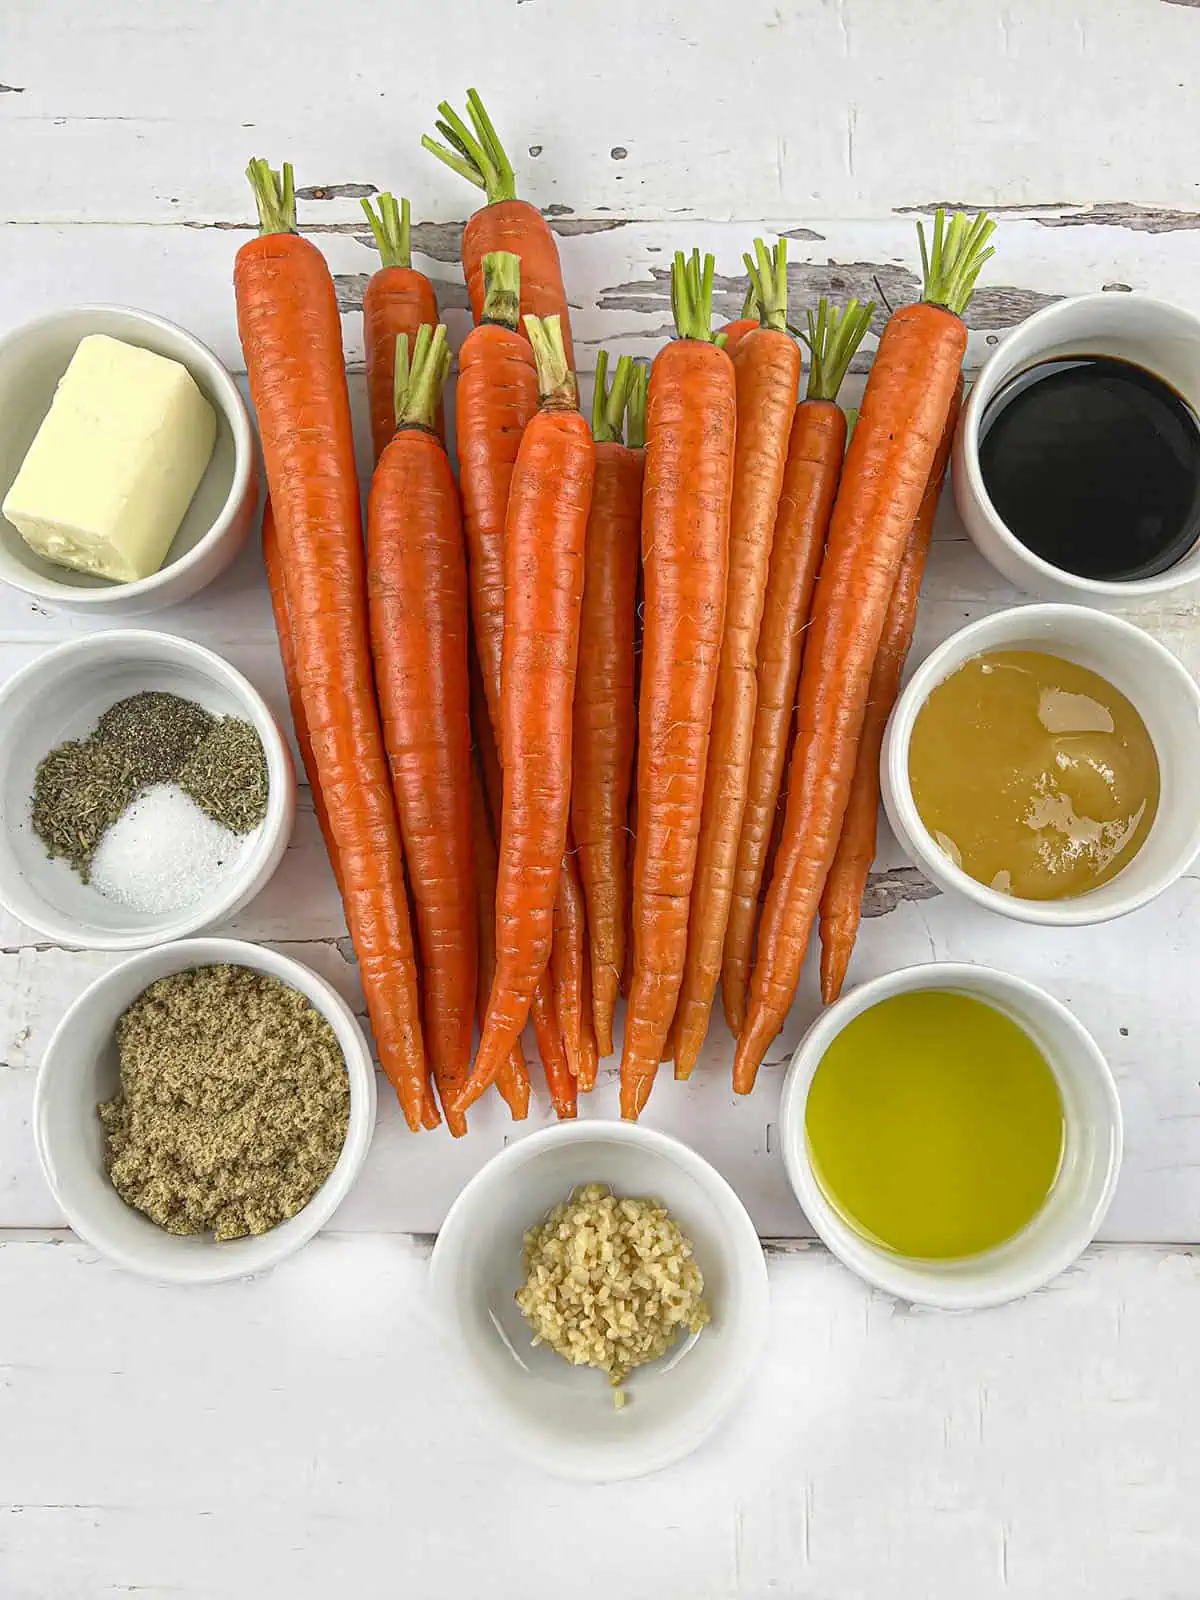 Ingredients for the honey glazed carrots. Carrots, balsamic vinegar, honey, oil, garlic, brown sugar, spics and butter.